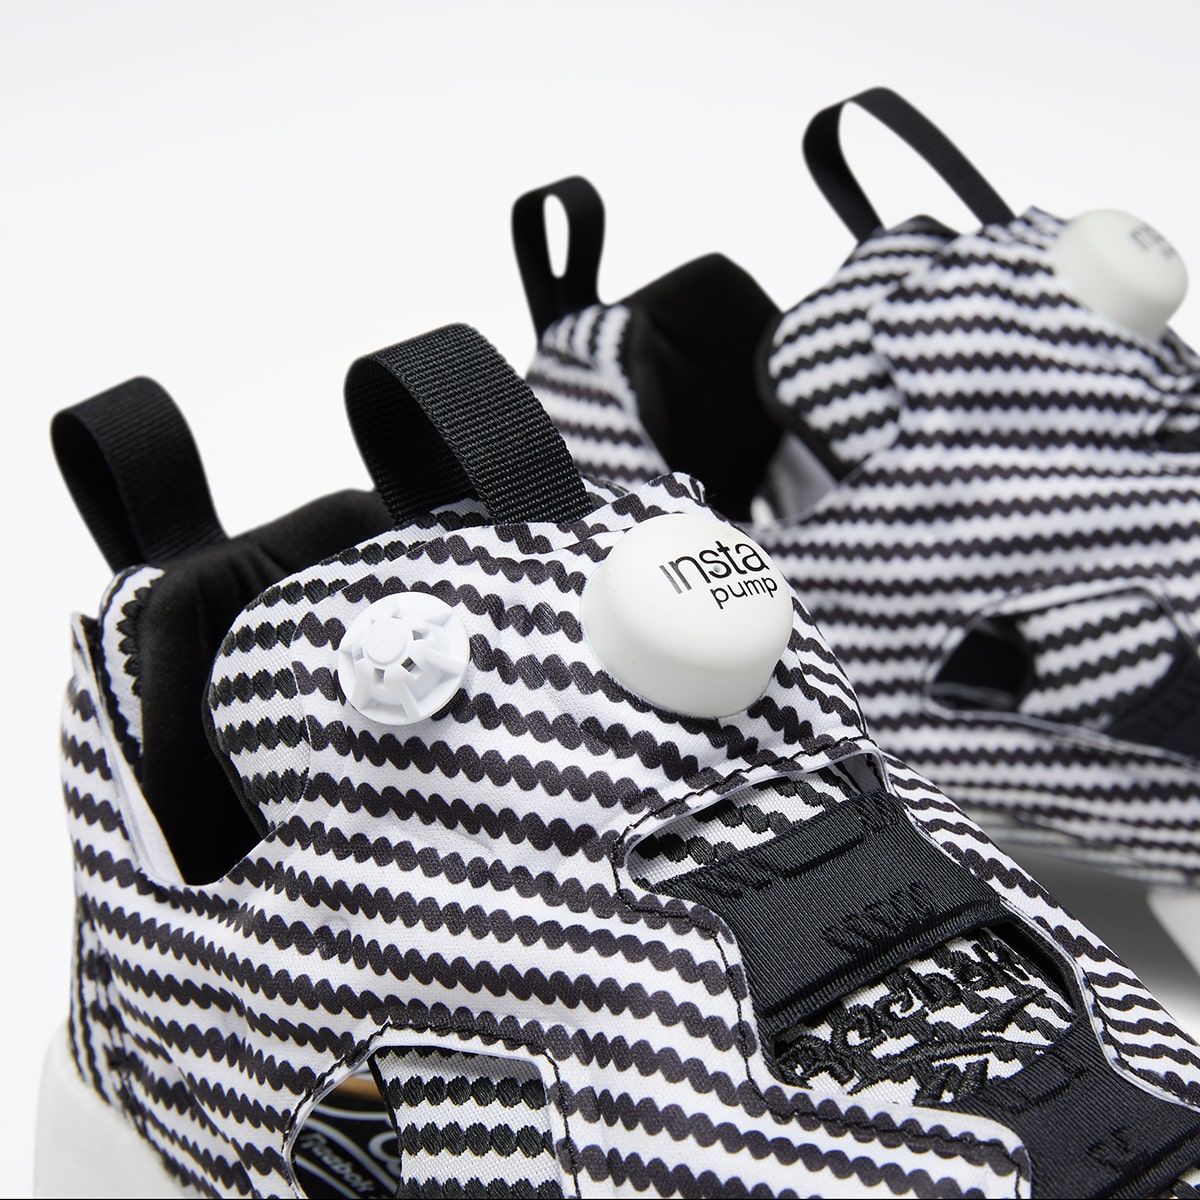 Details about   Reebok Instapump Fury OG MU Carbon Fiber Black White Men Lifestyle Shoes DV7305